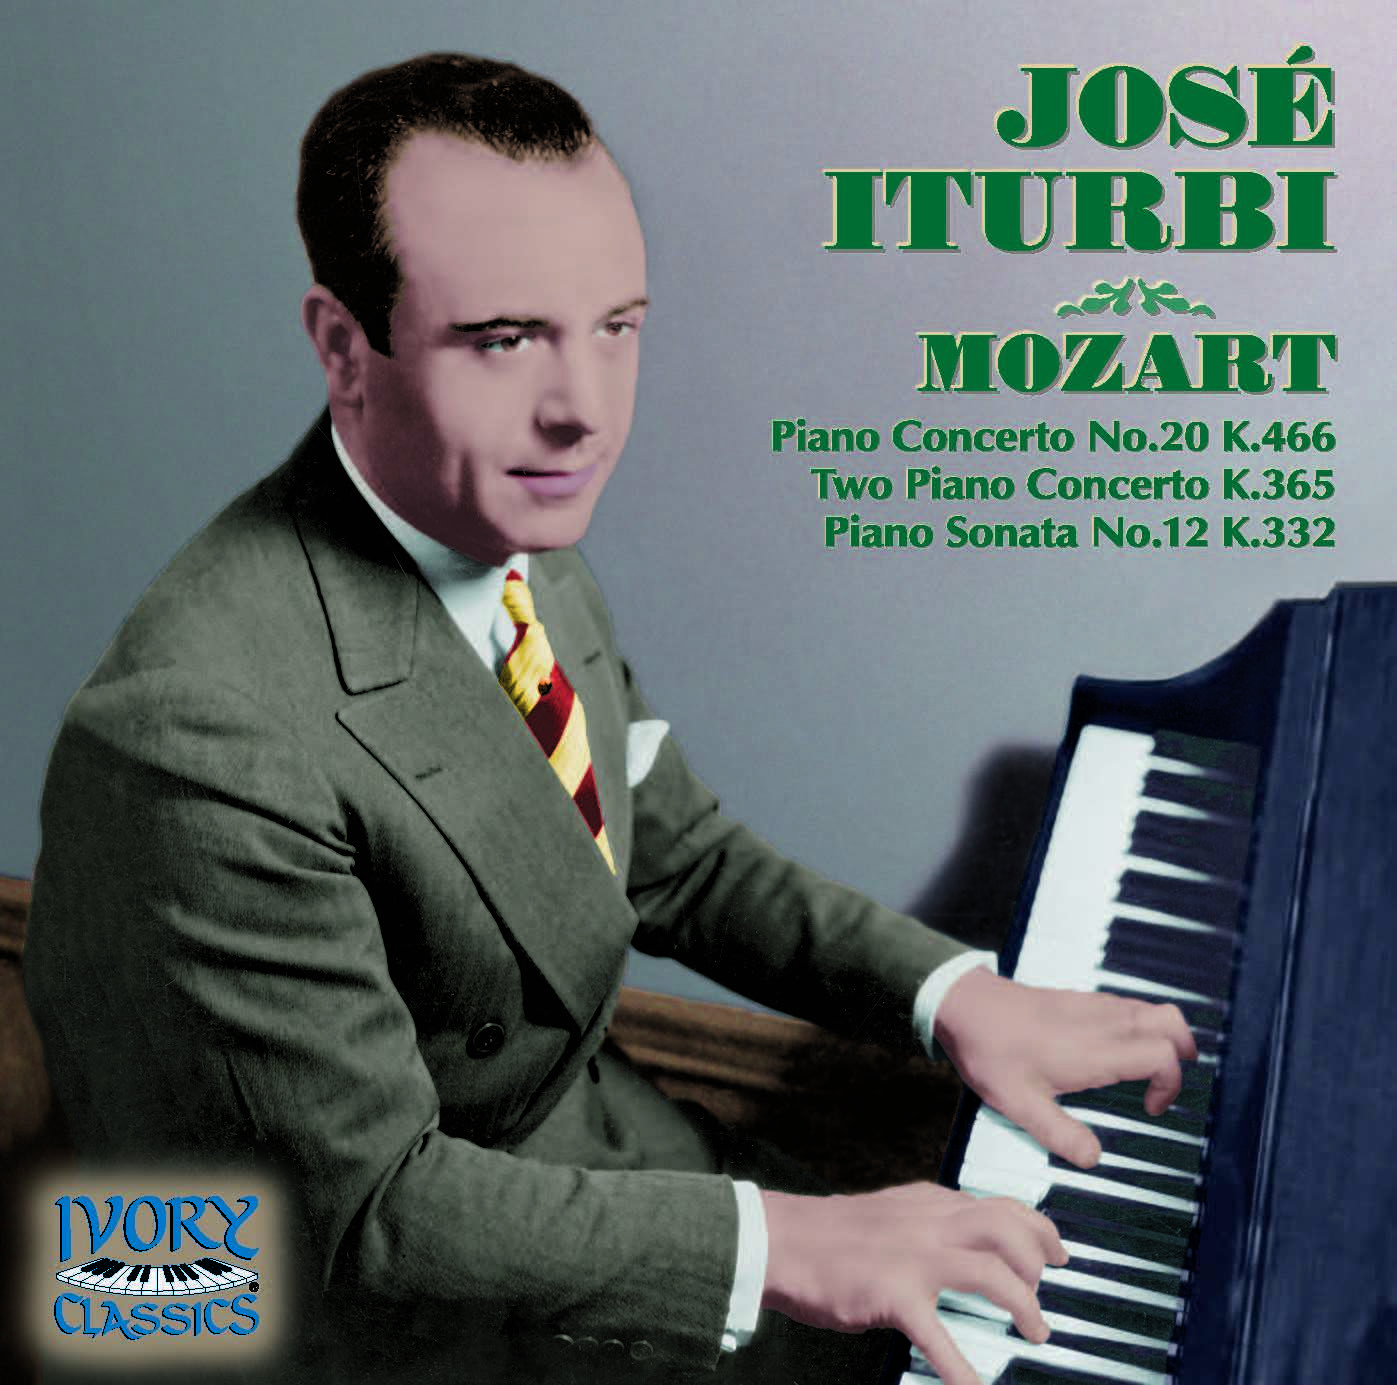 José Iturbi: Mozart Piano Concertos and Piano Sonata